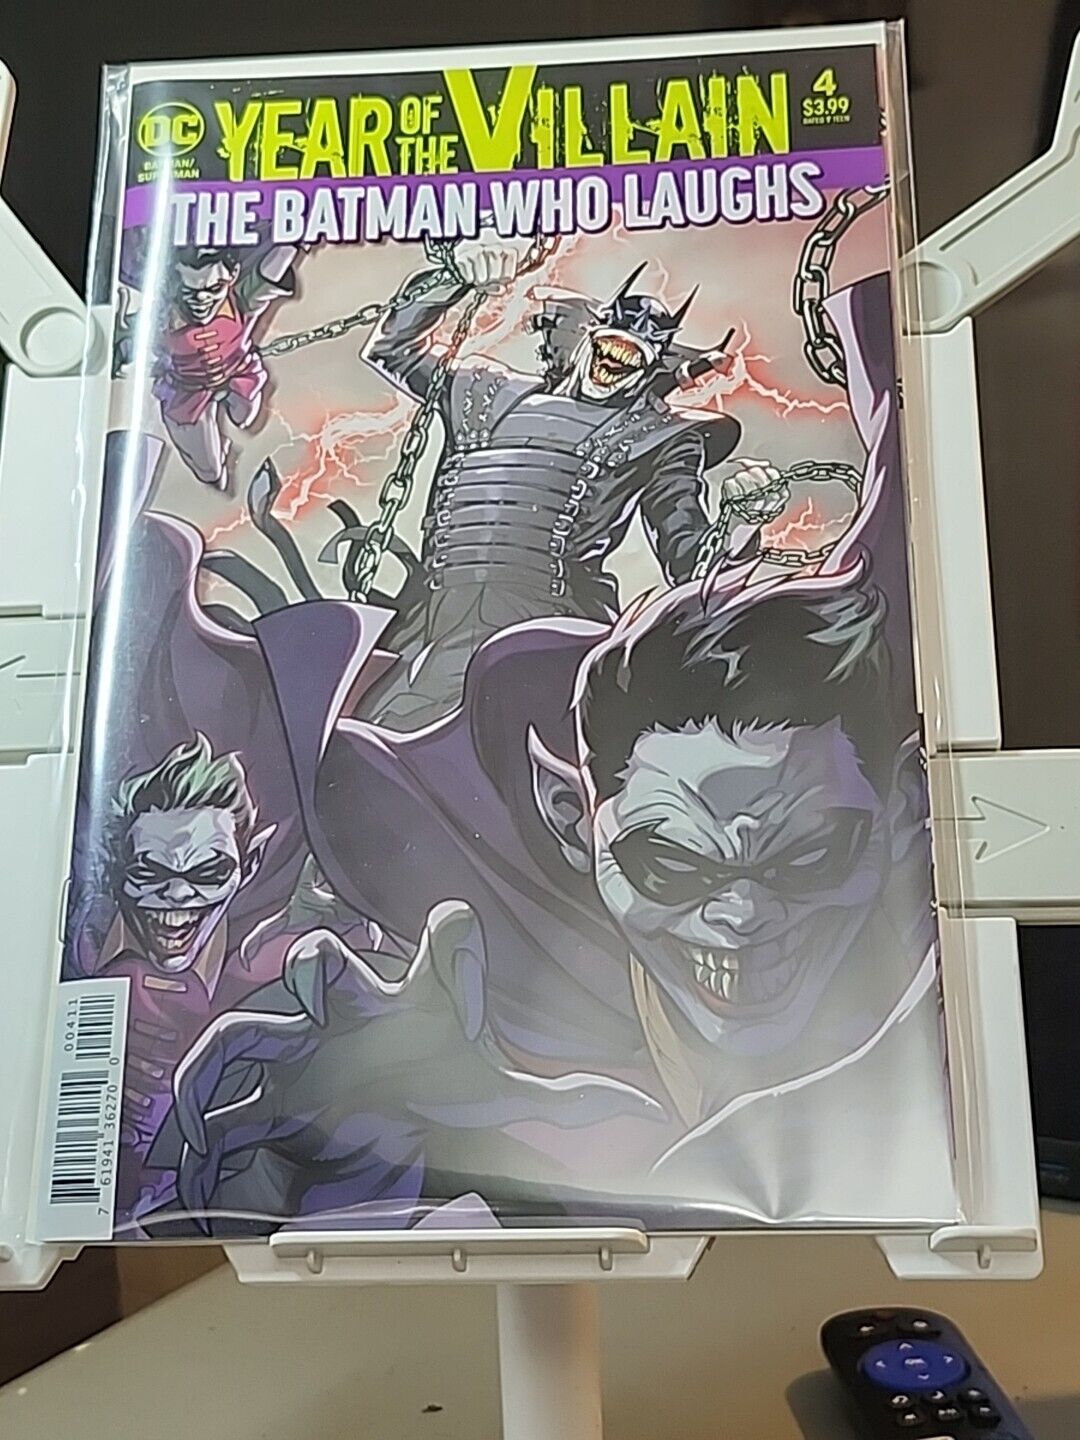 DC BATMAN/SUPERMAN #4 Year of the Villain: The Batman Who Laughs (Acetate Cover)